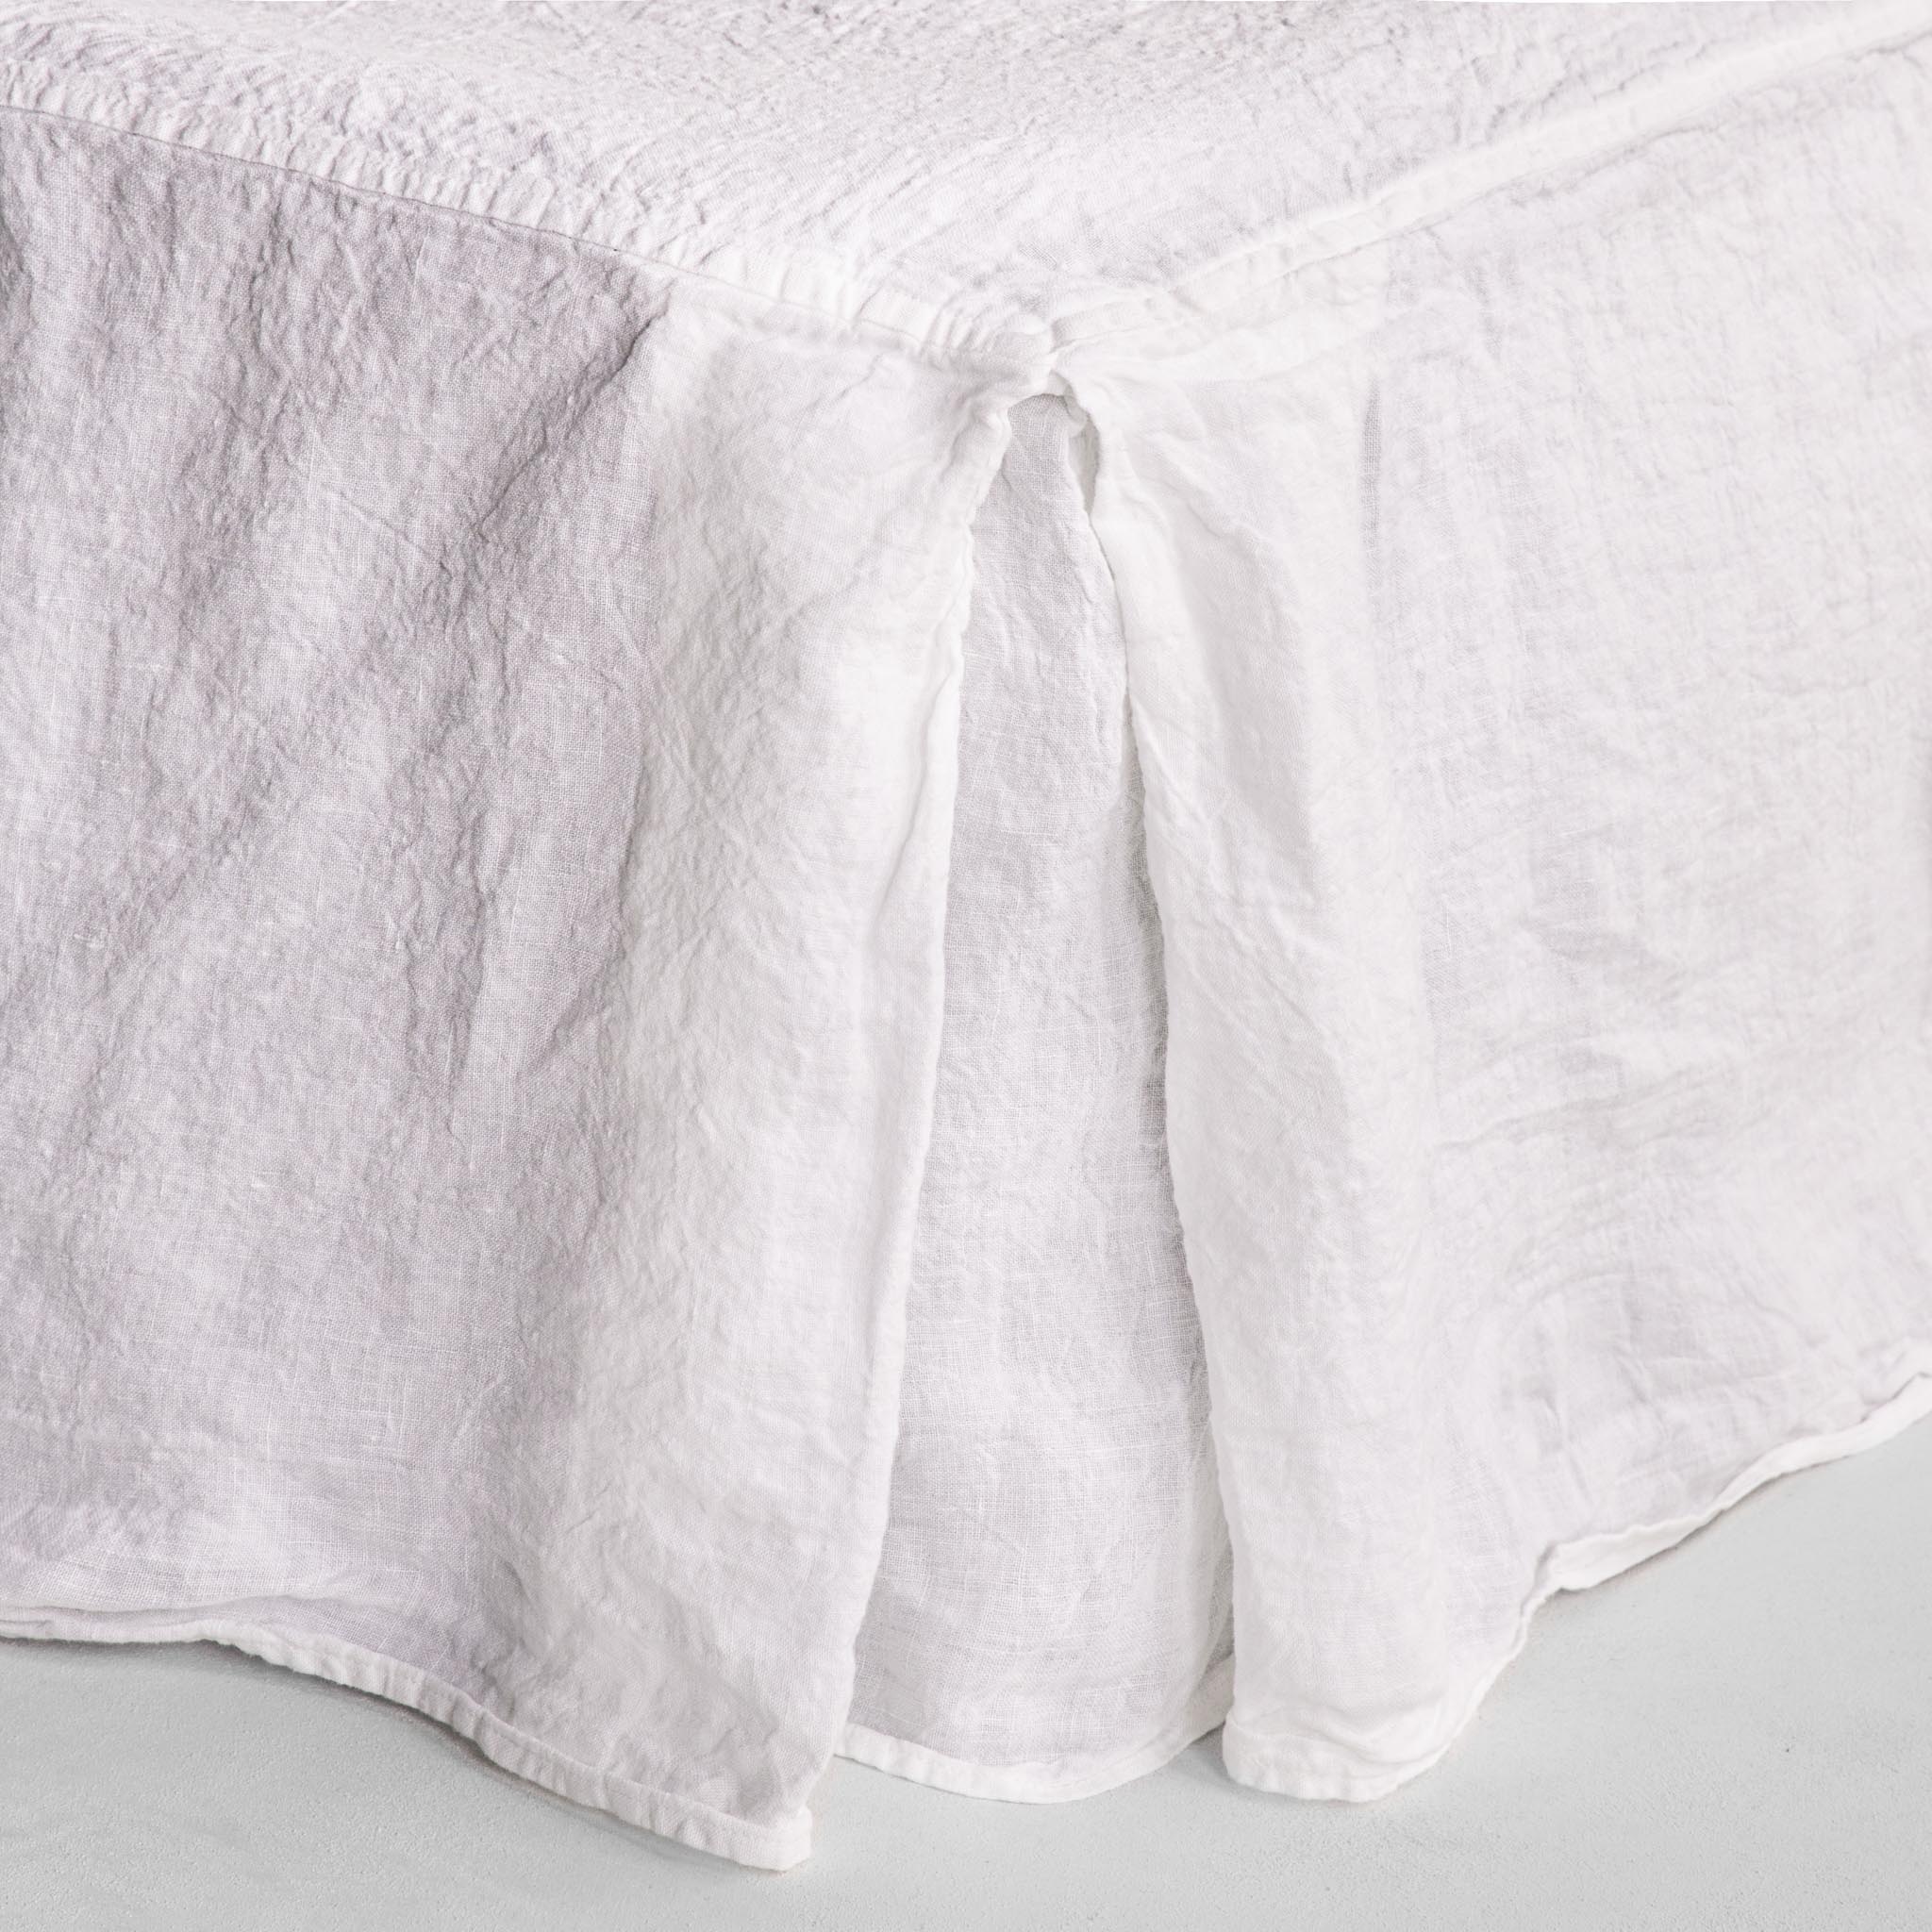 Linen Valance/Bed Skirt | Antique White | Hale Mercantile Co.